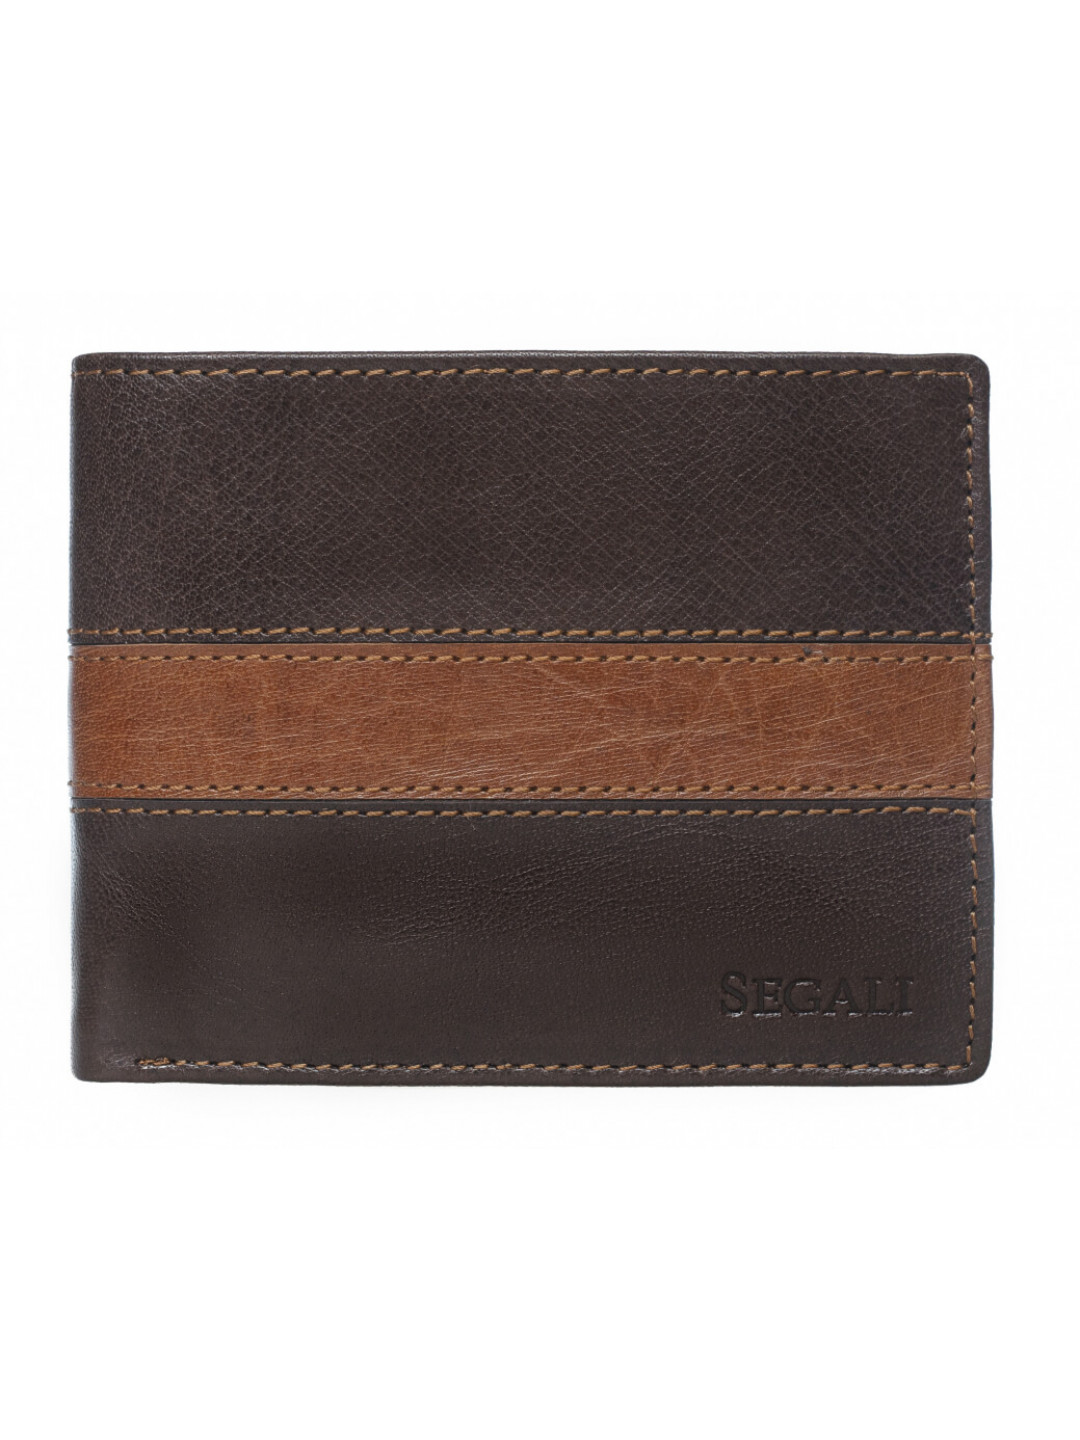 SEGALI Pánská kožená peněženka 81096 brown tan